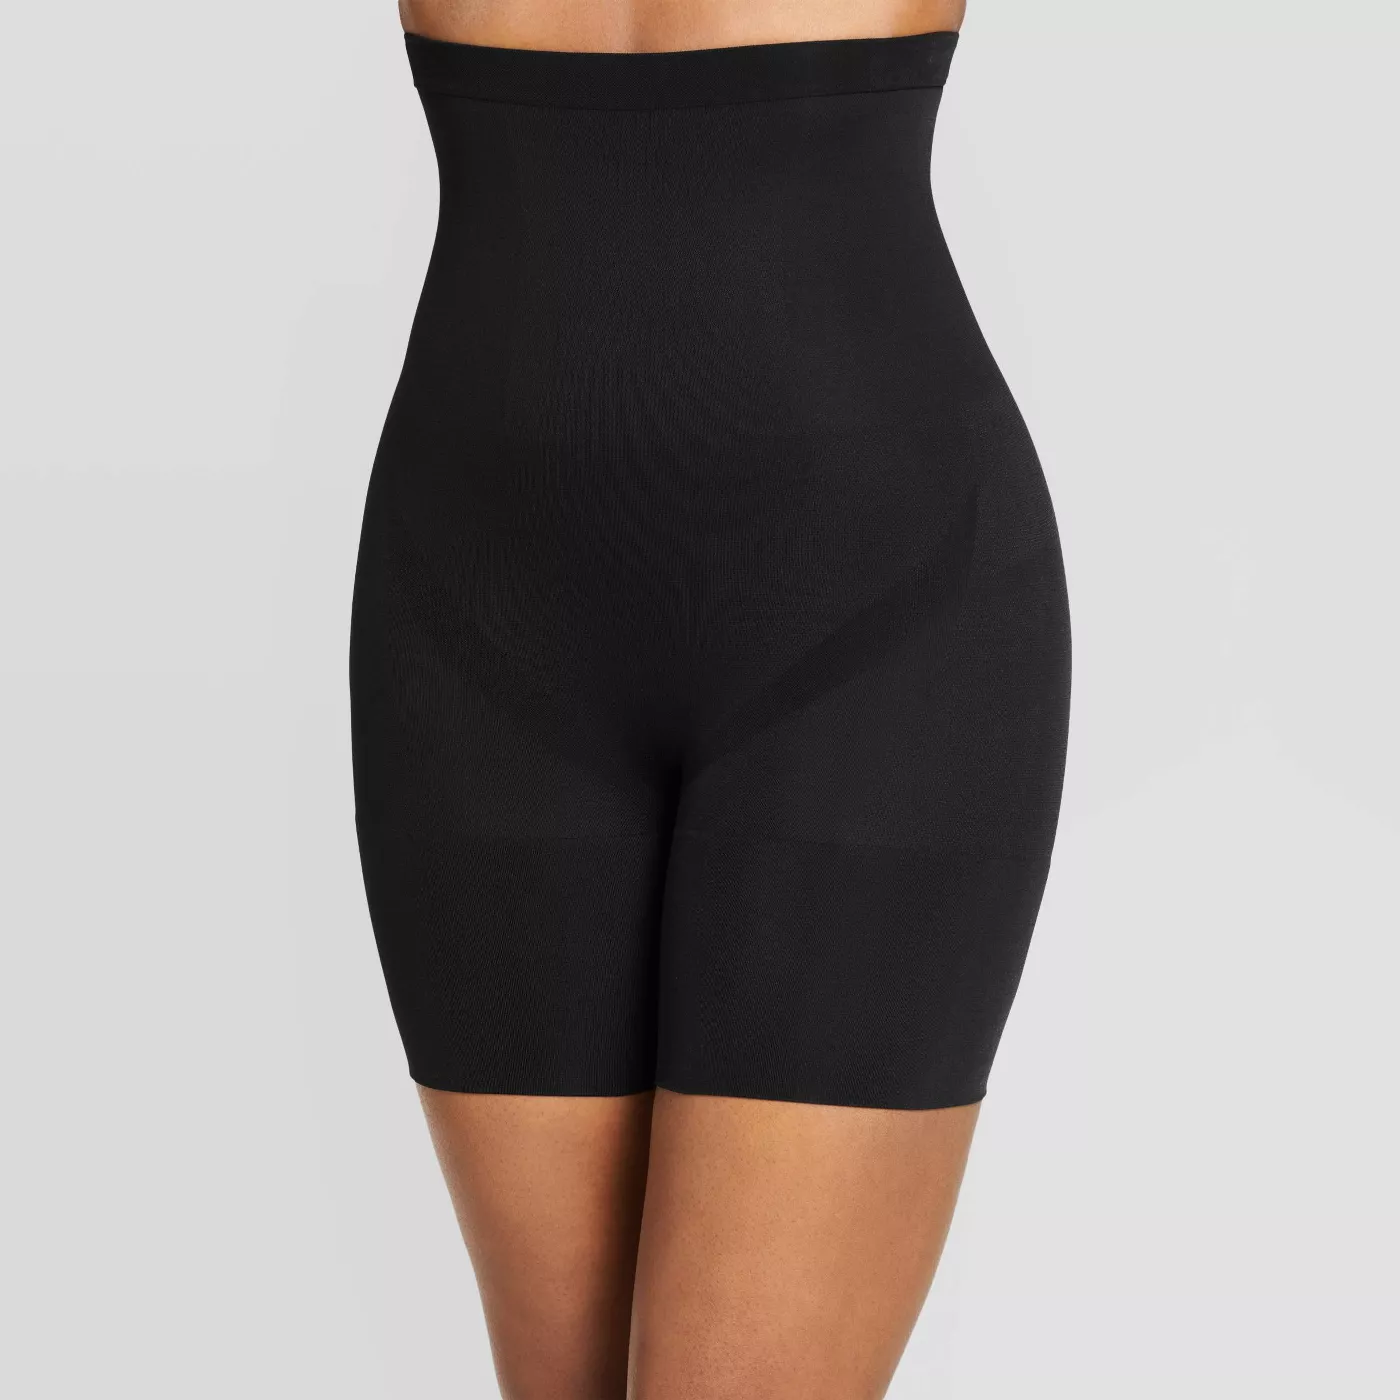 Jockey Generation™ Women's Slimming High-Waist Shorts - image 1 of 3